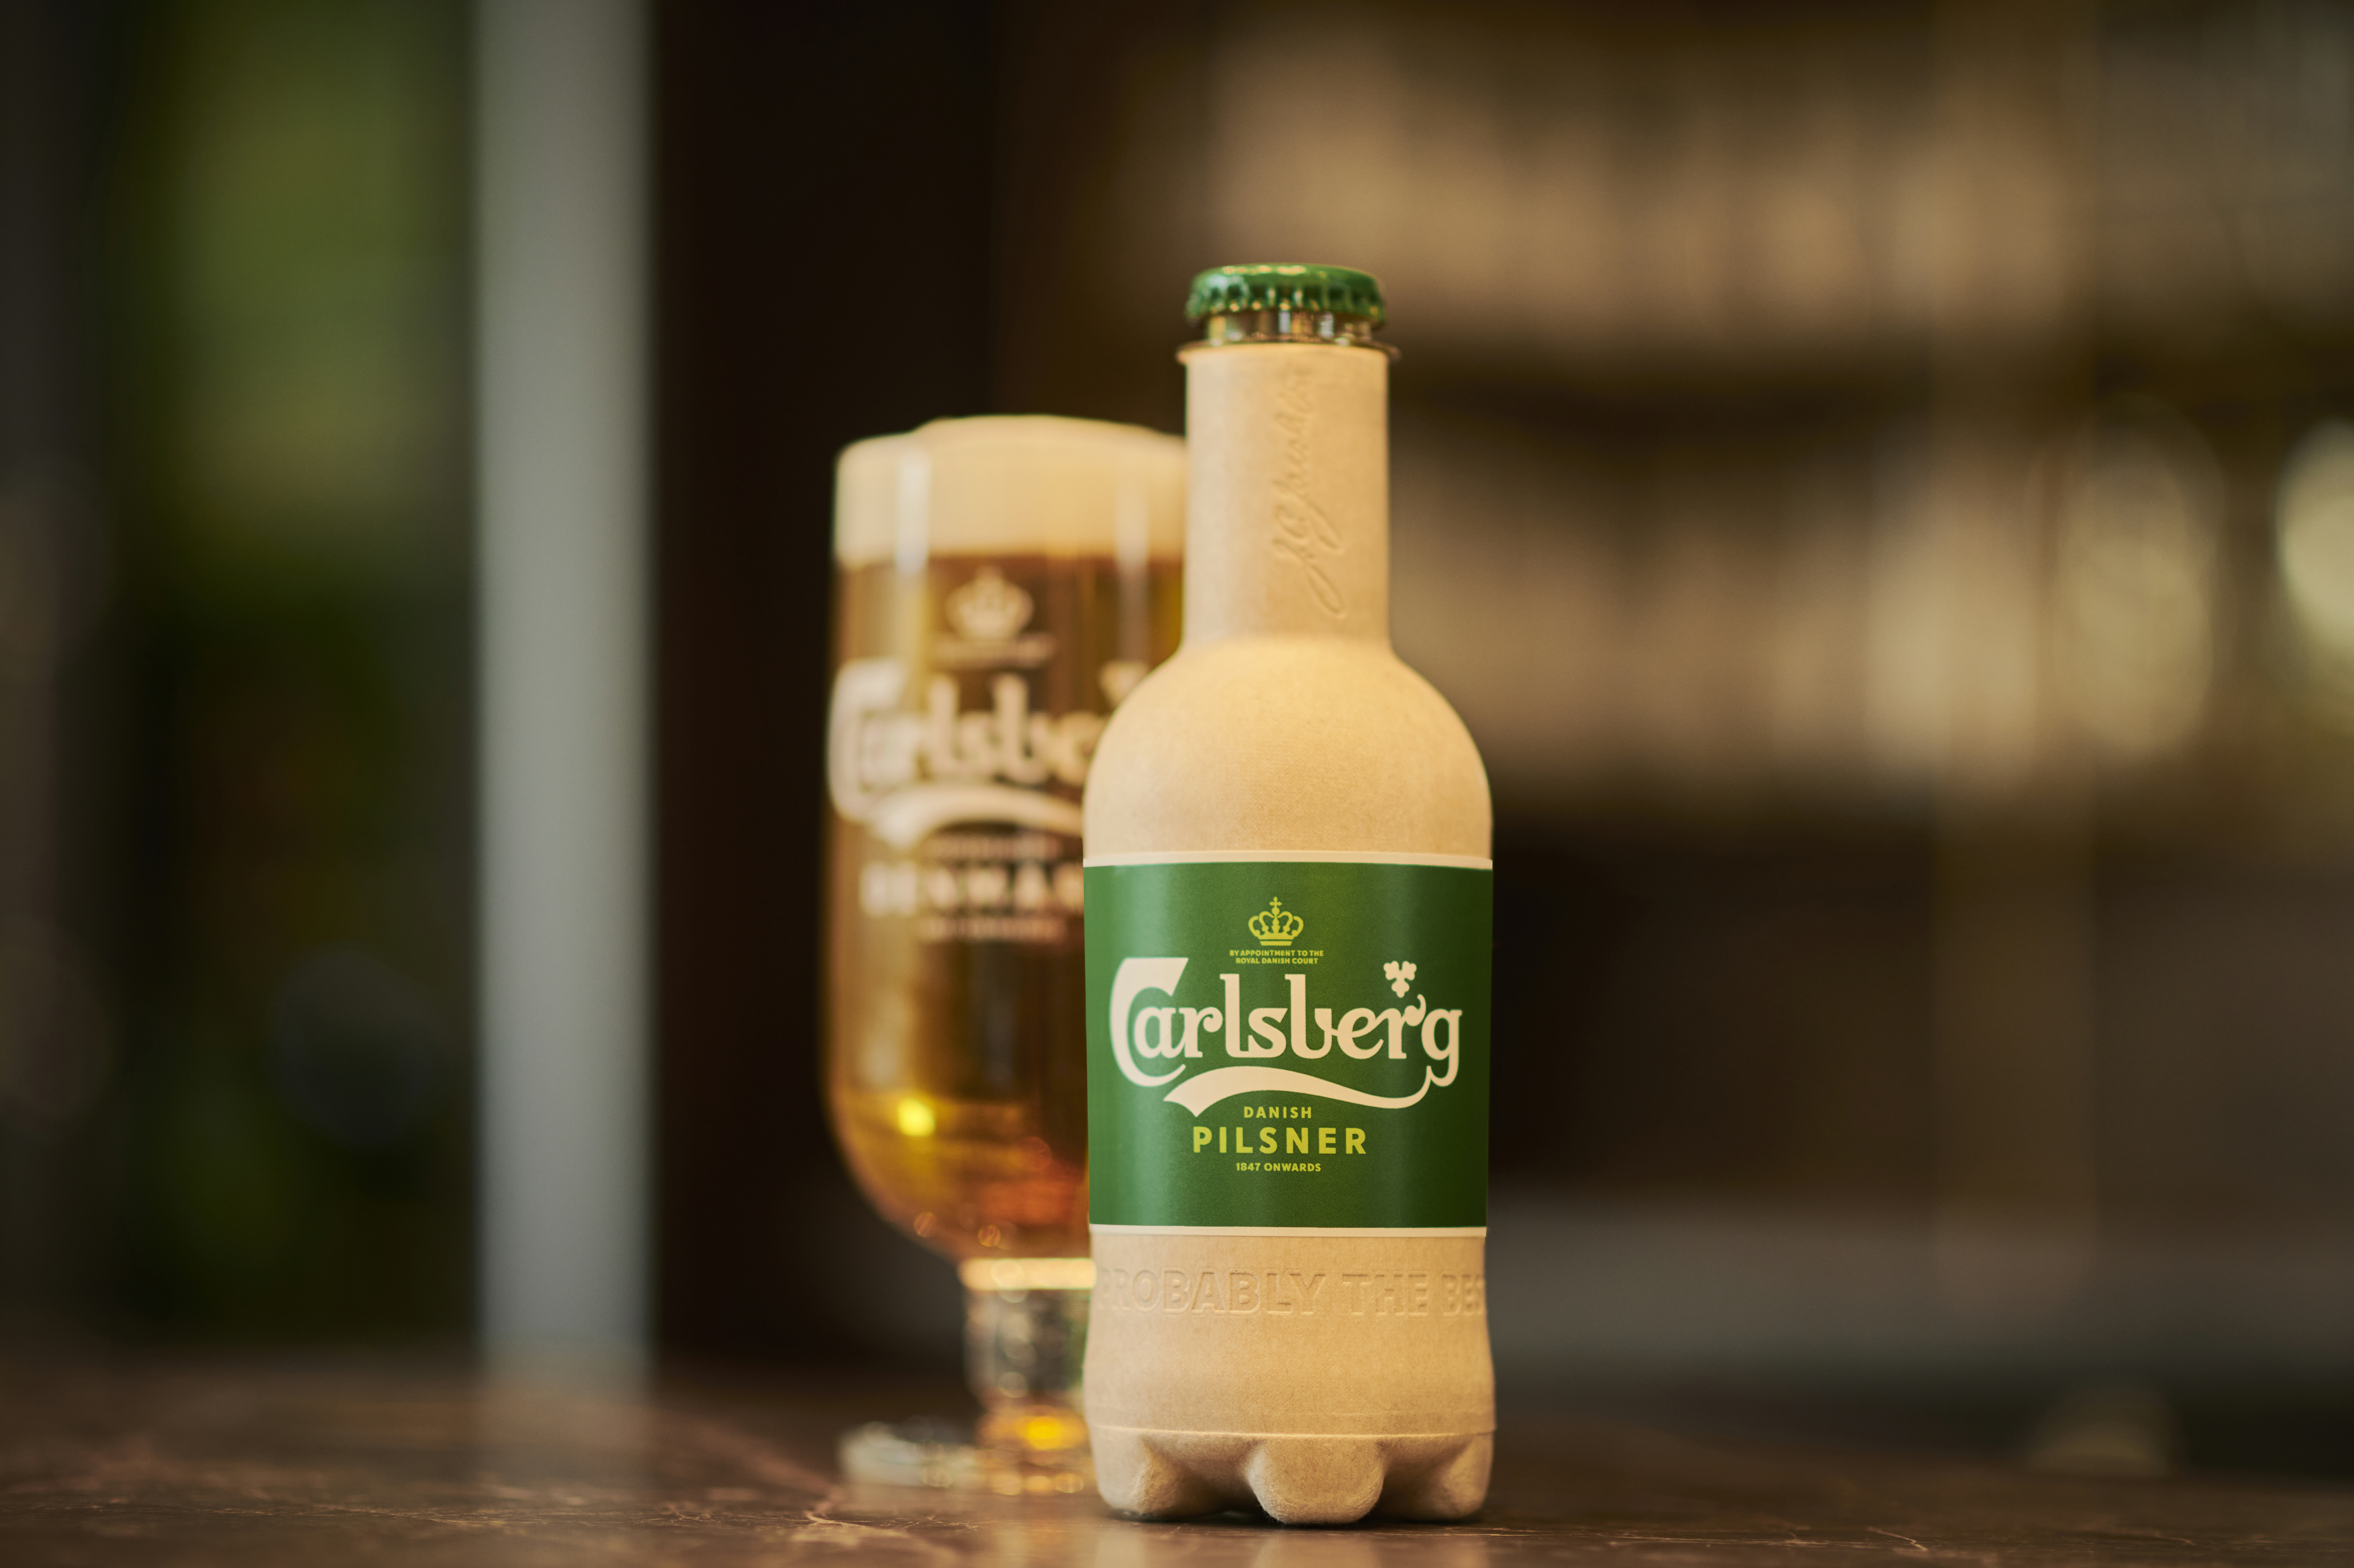 Carlsberg beer and bottle 